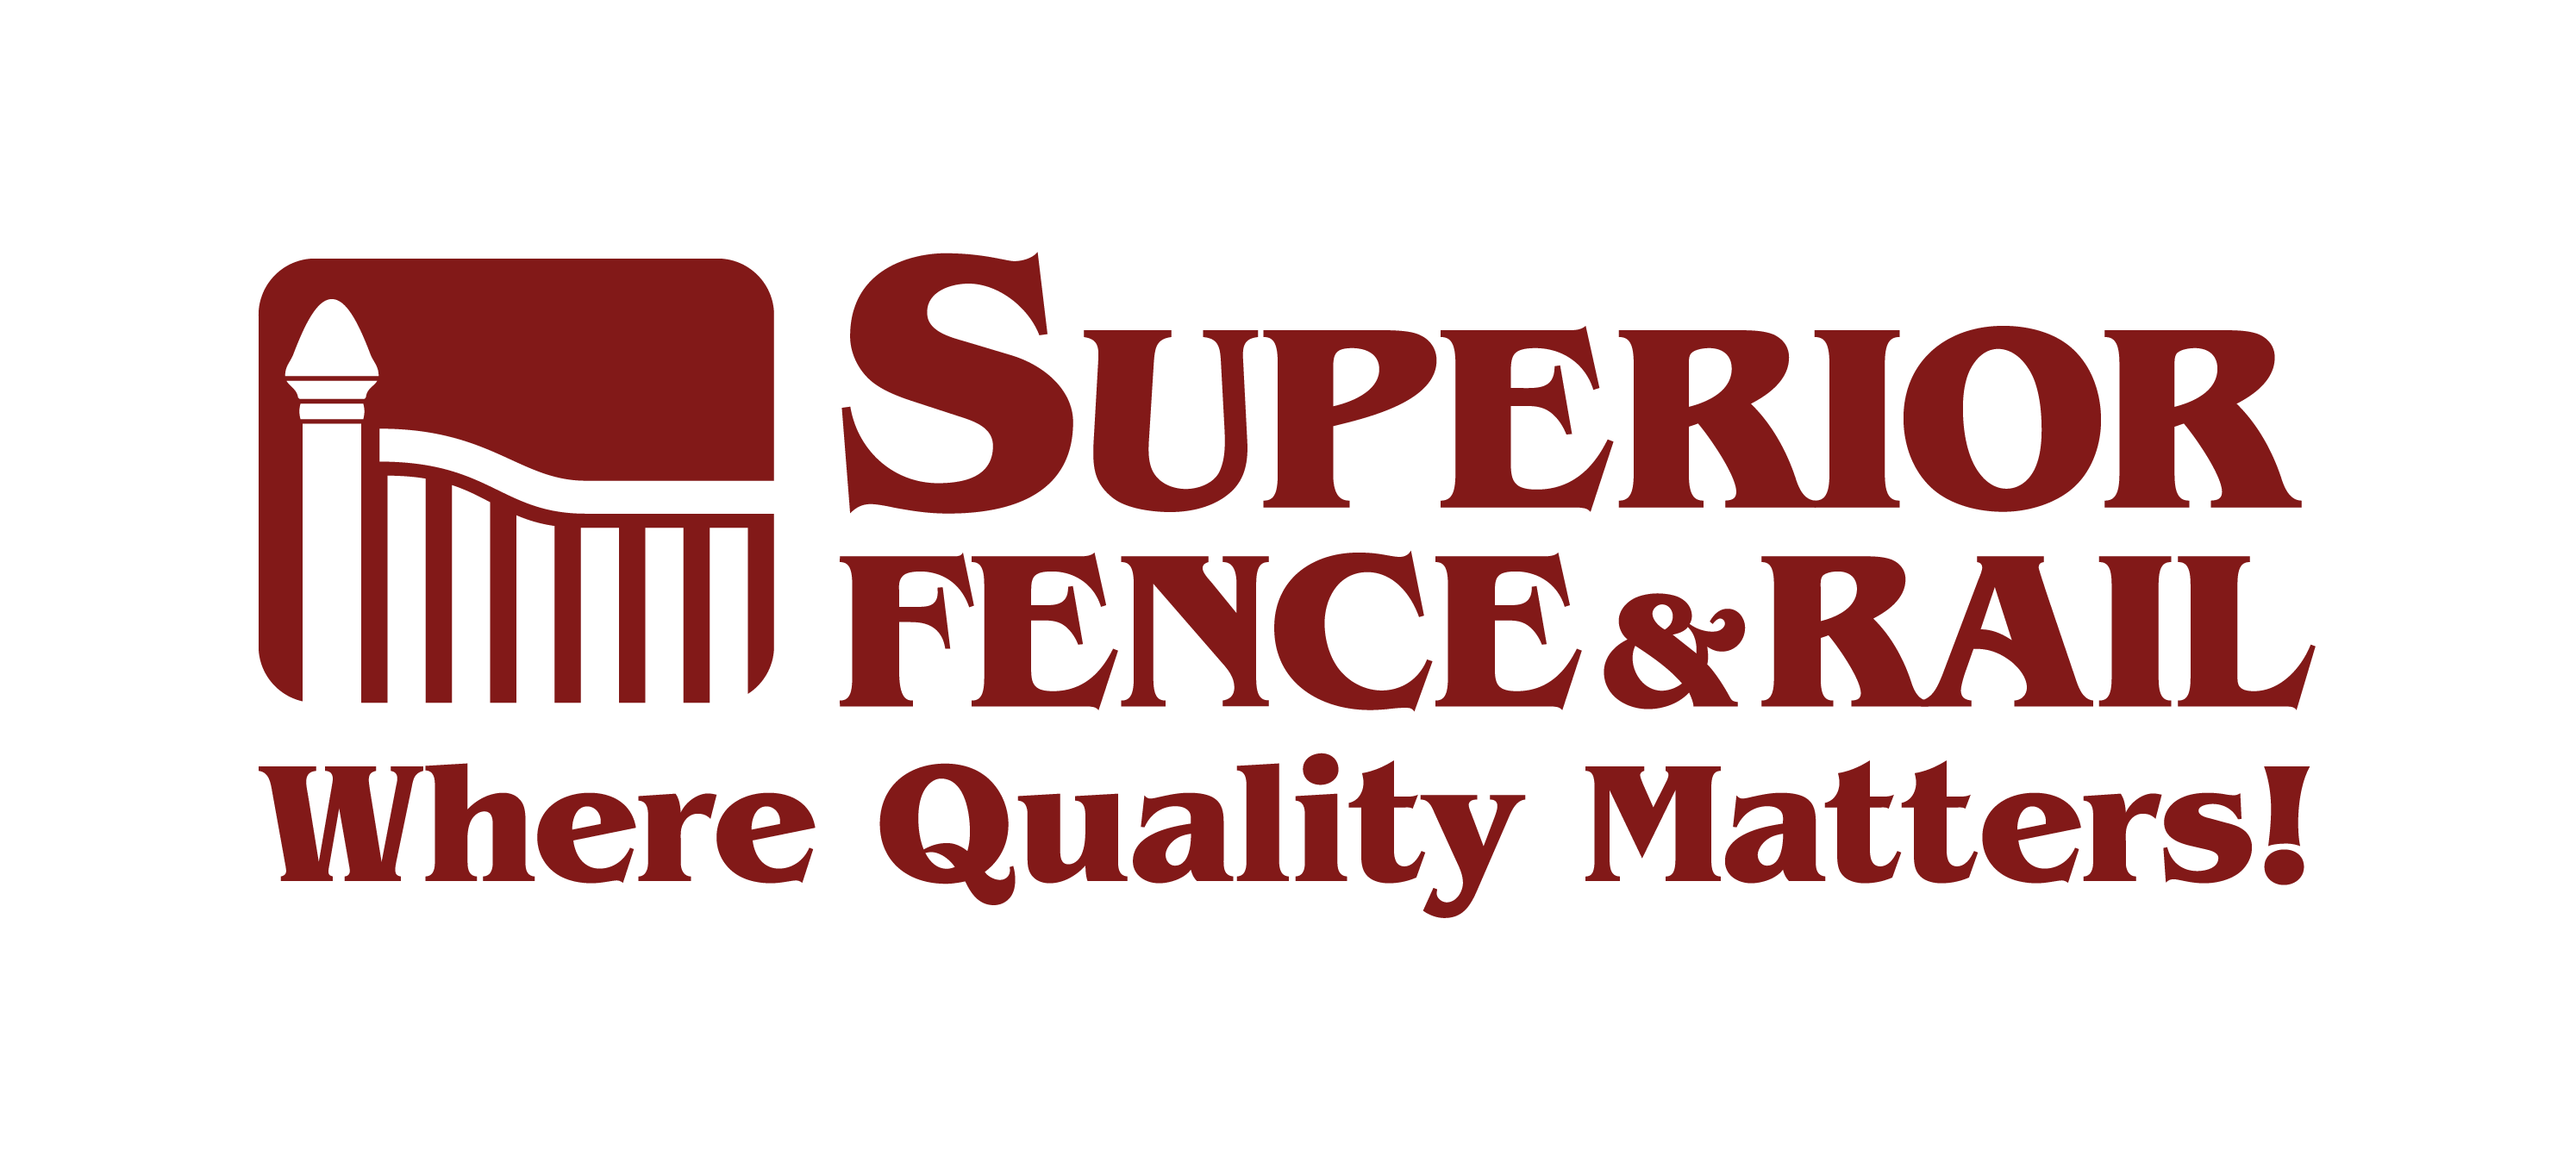 Superior Fence & Rail Celebrates Multi-Market Expansion in the Gulf Coast and Atlanta